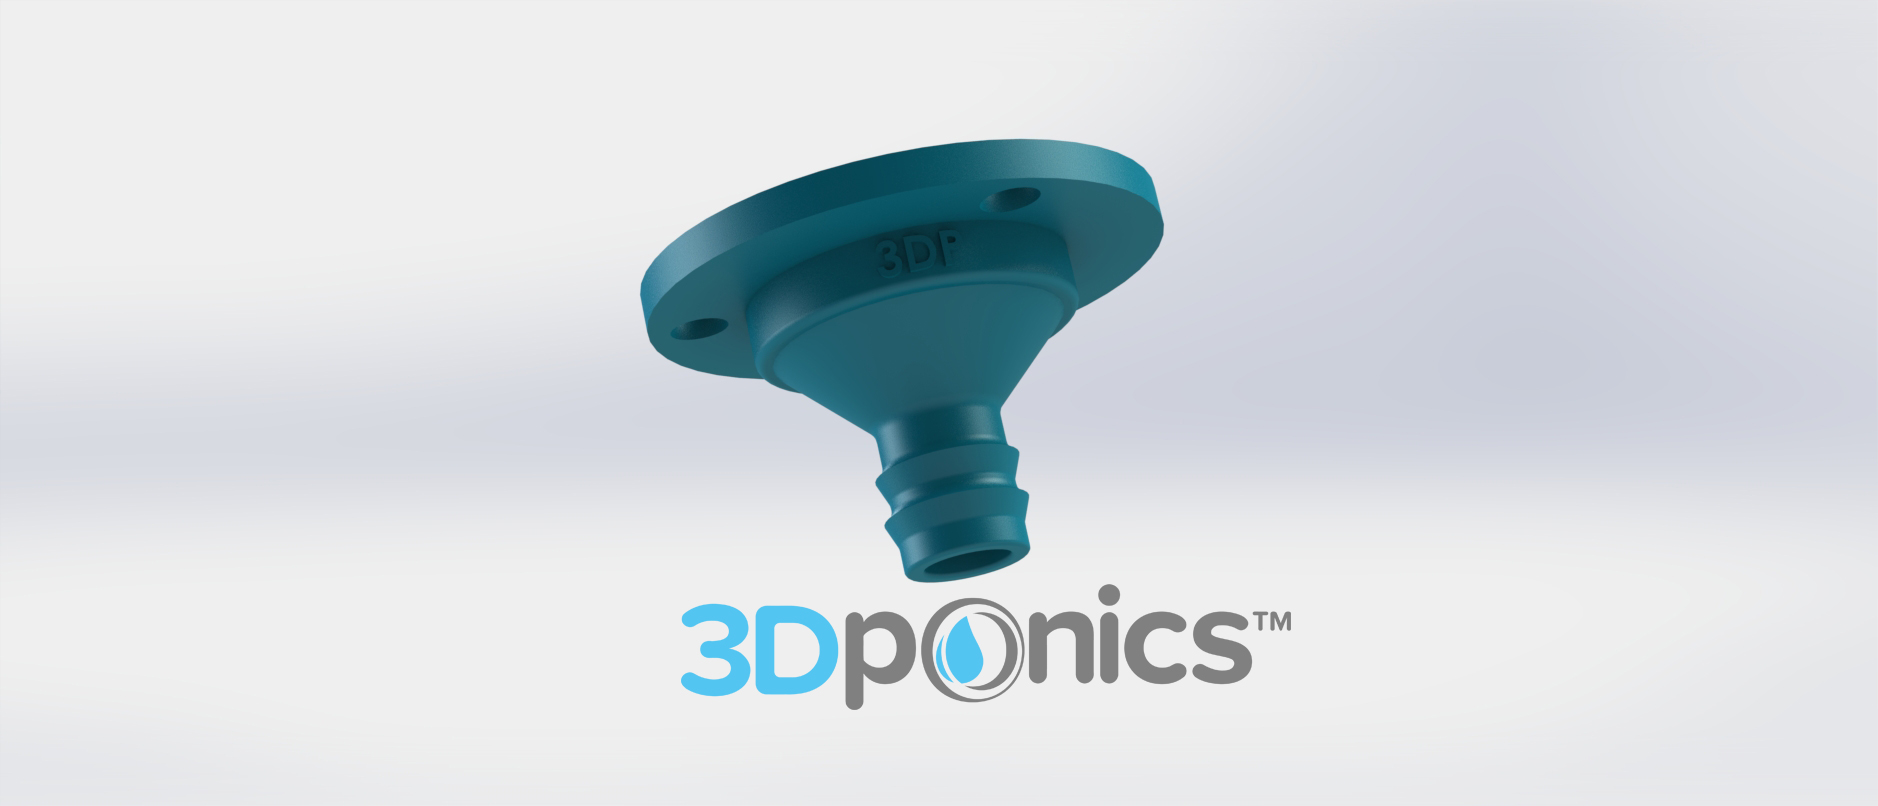 3-Hole Drip Nozzle 3/4 Inch - 3Dponics Drip Hydroponics